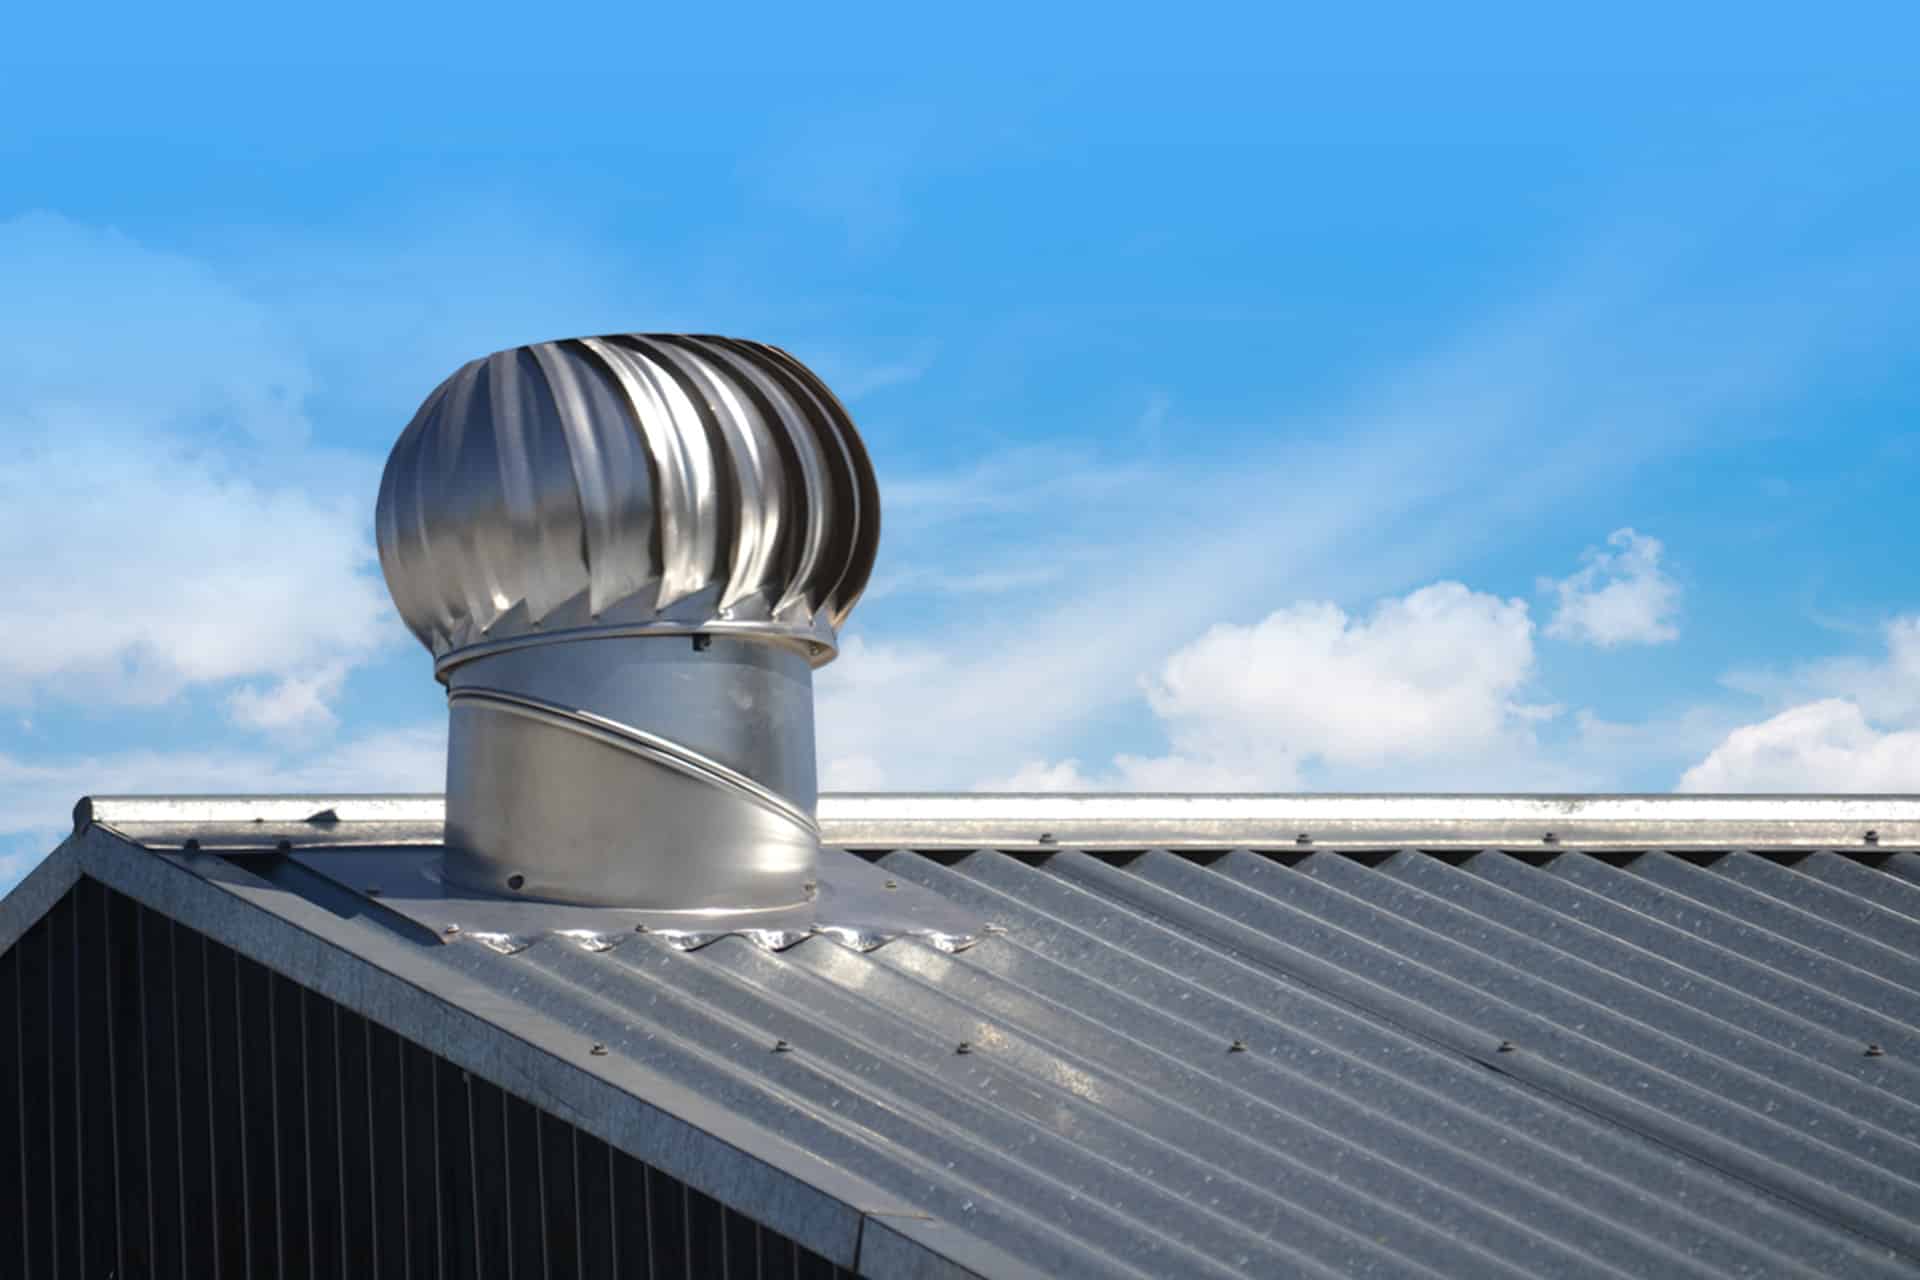 residential turbine vent on metal roof